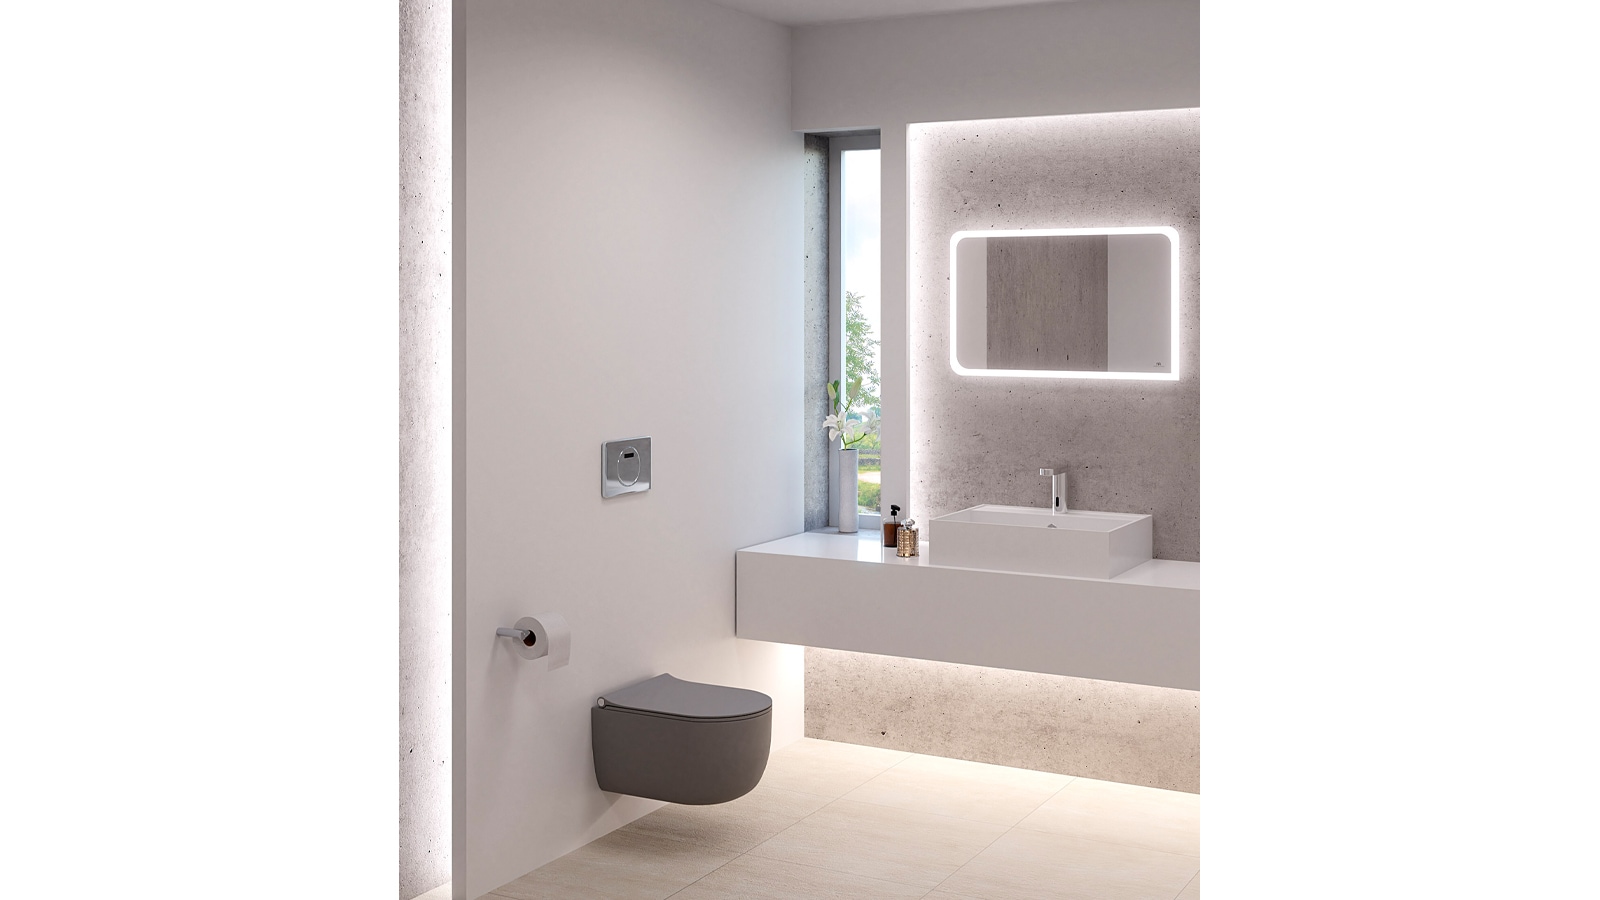 Acro Compact toilet + Pure Line mirror + Hotels electronic sensor tap Noken Porcelanosa